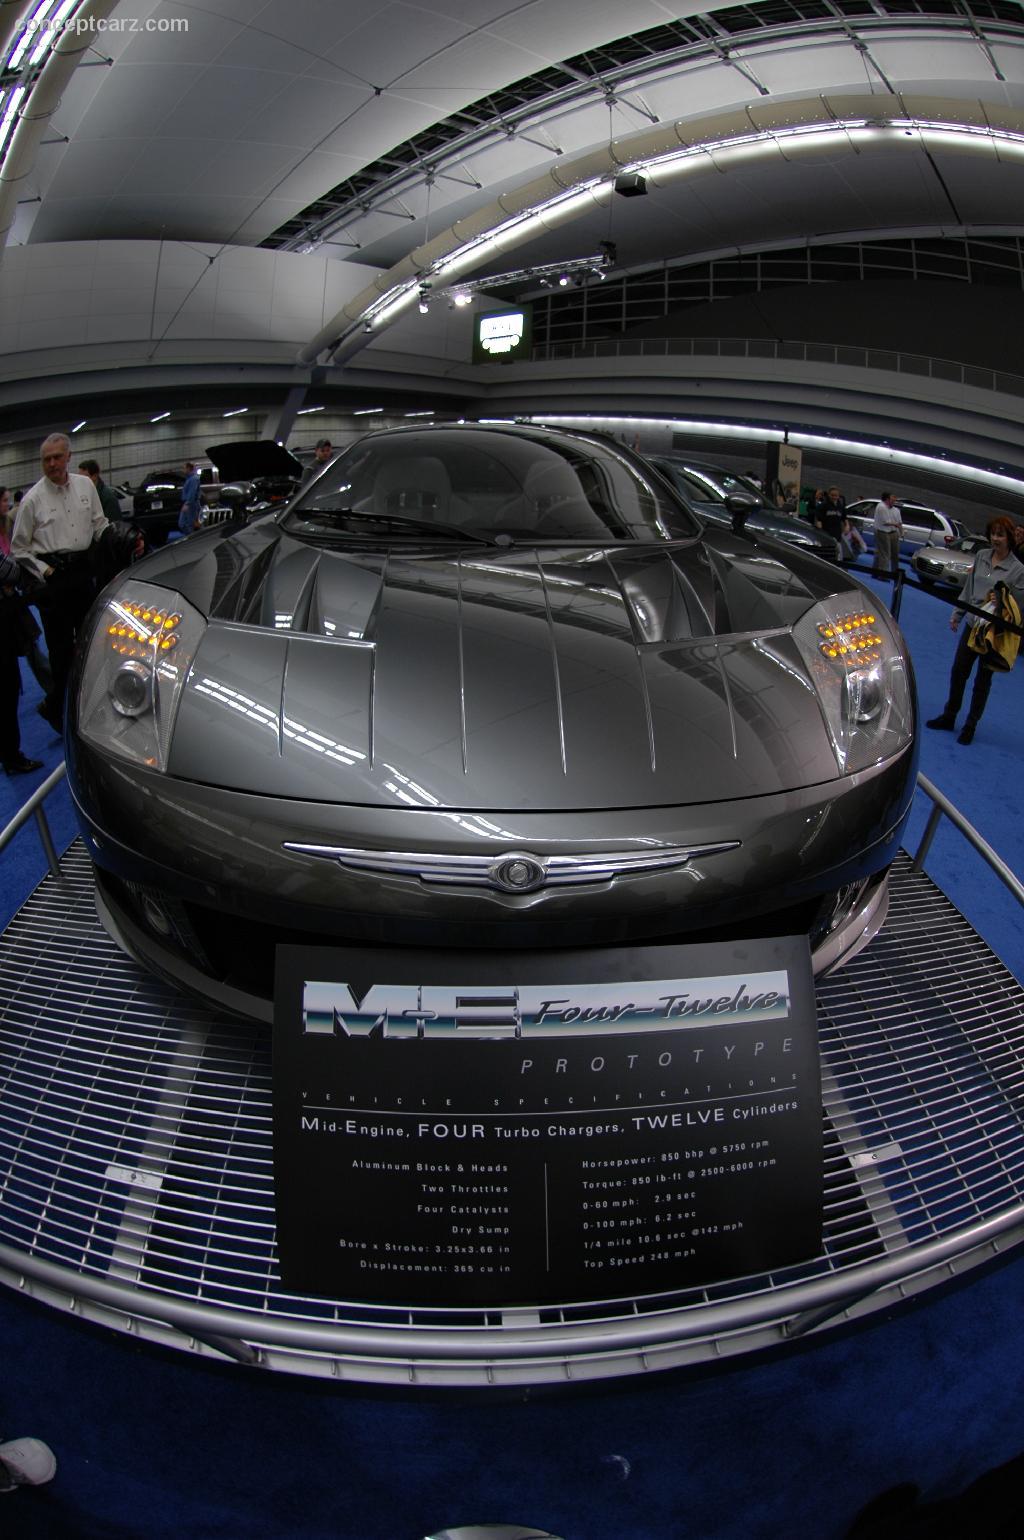 Chrysler composite concept vehicle